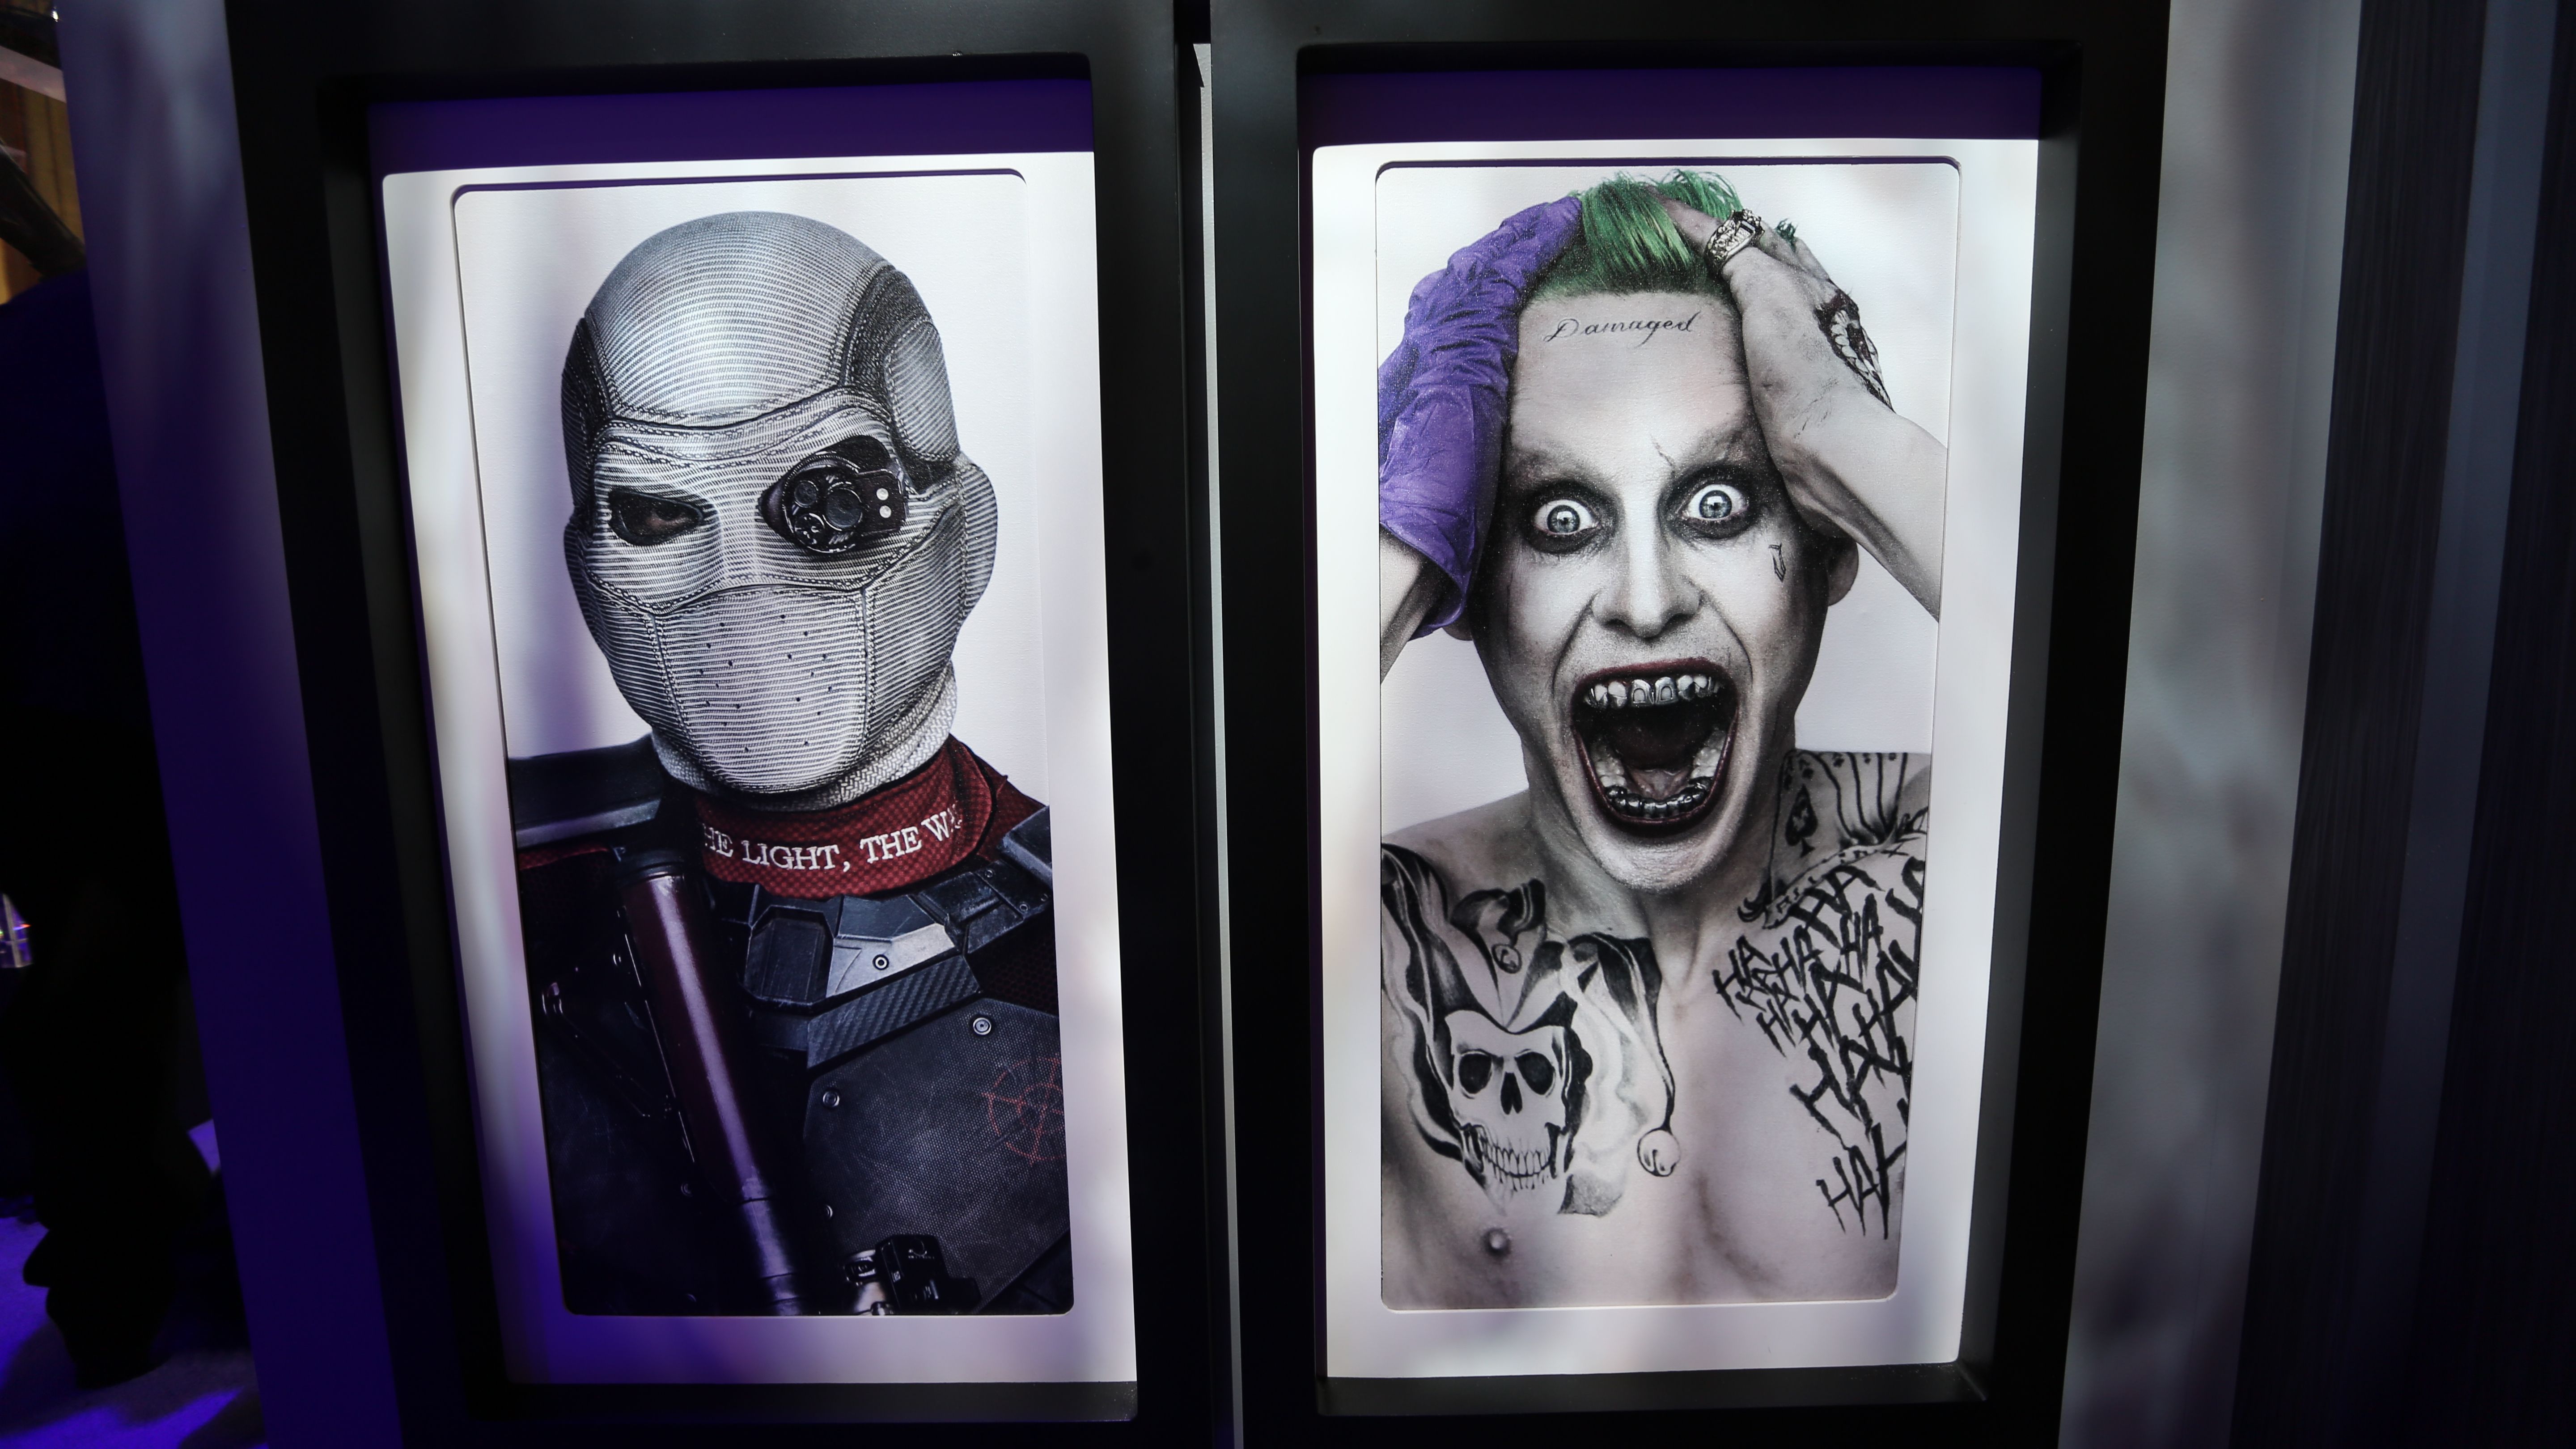 Suicide Squad Deadshot and Joker wallpaper 2018 in Marvel